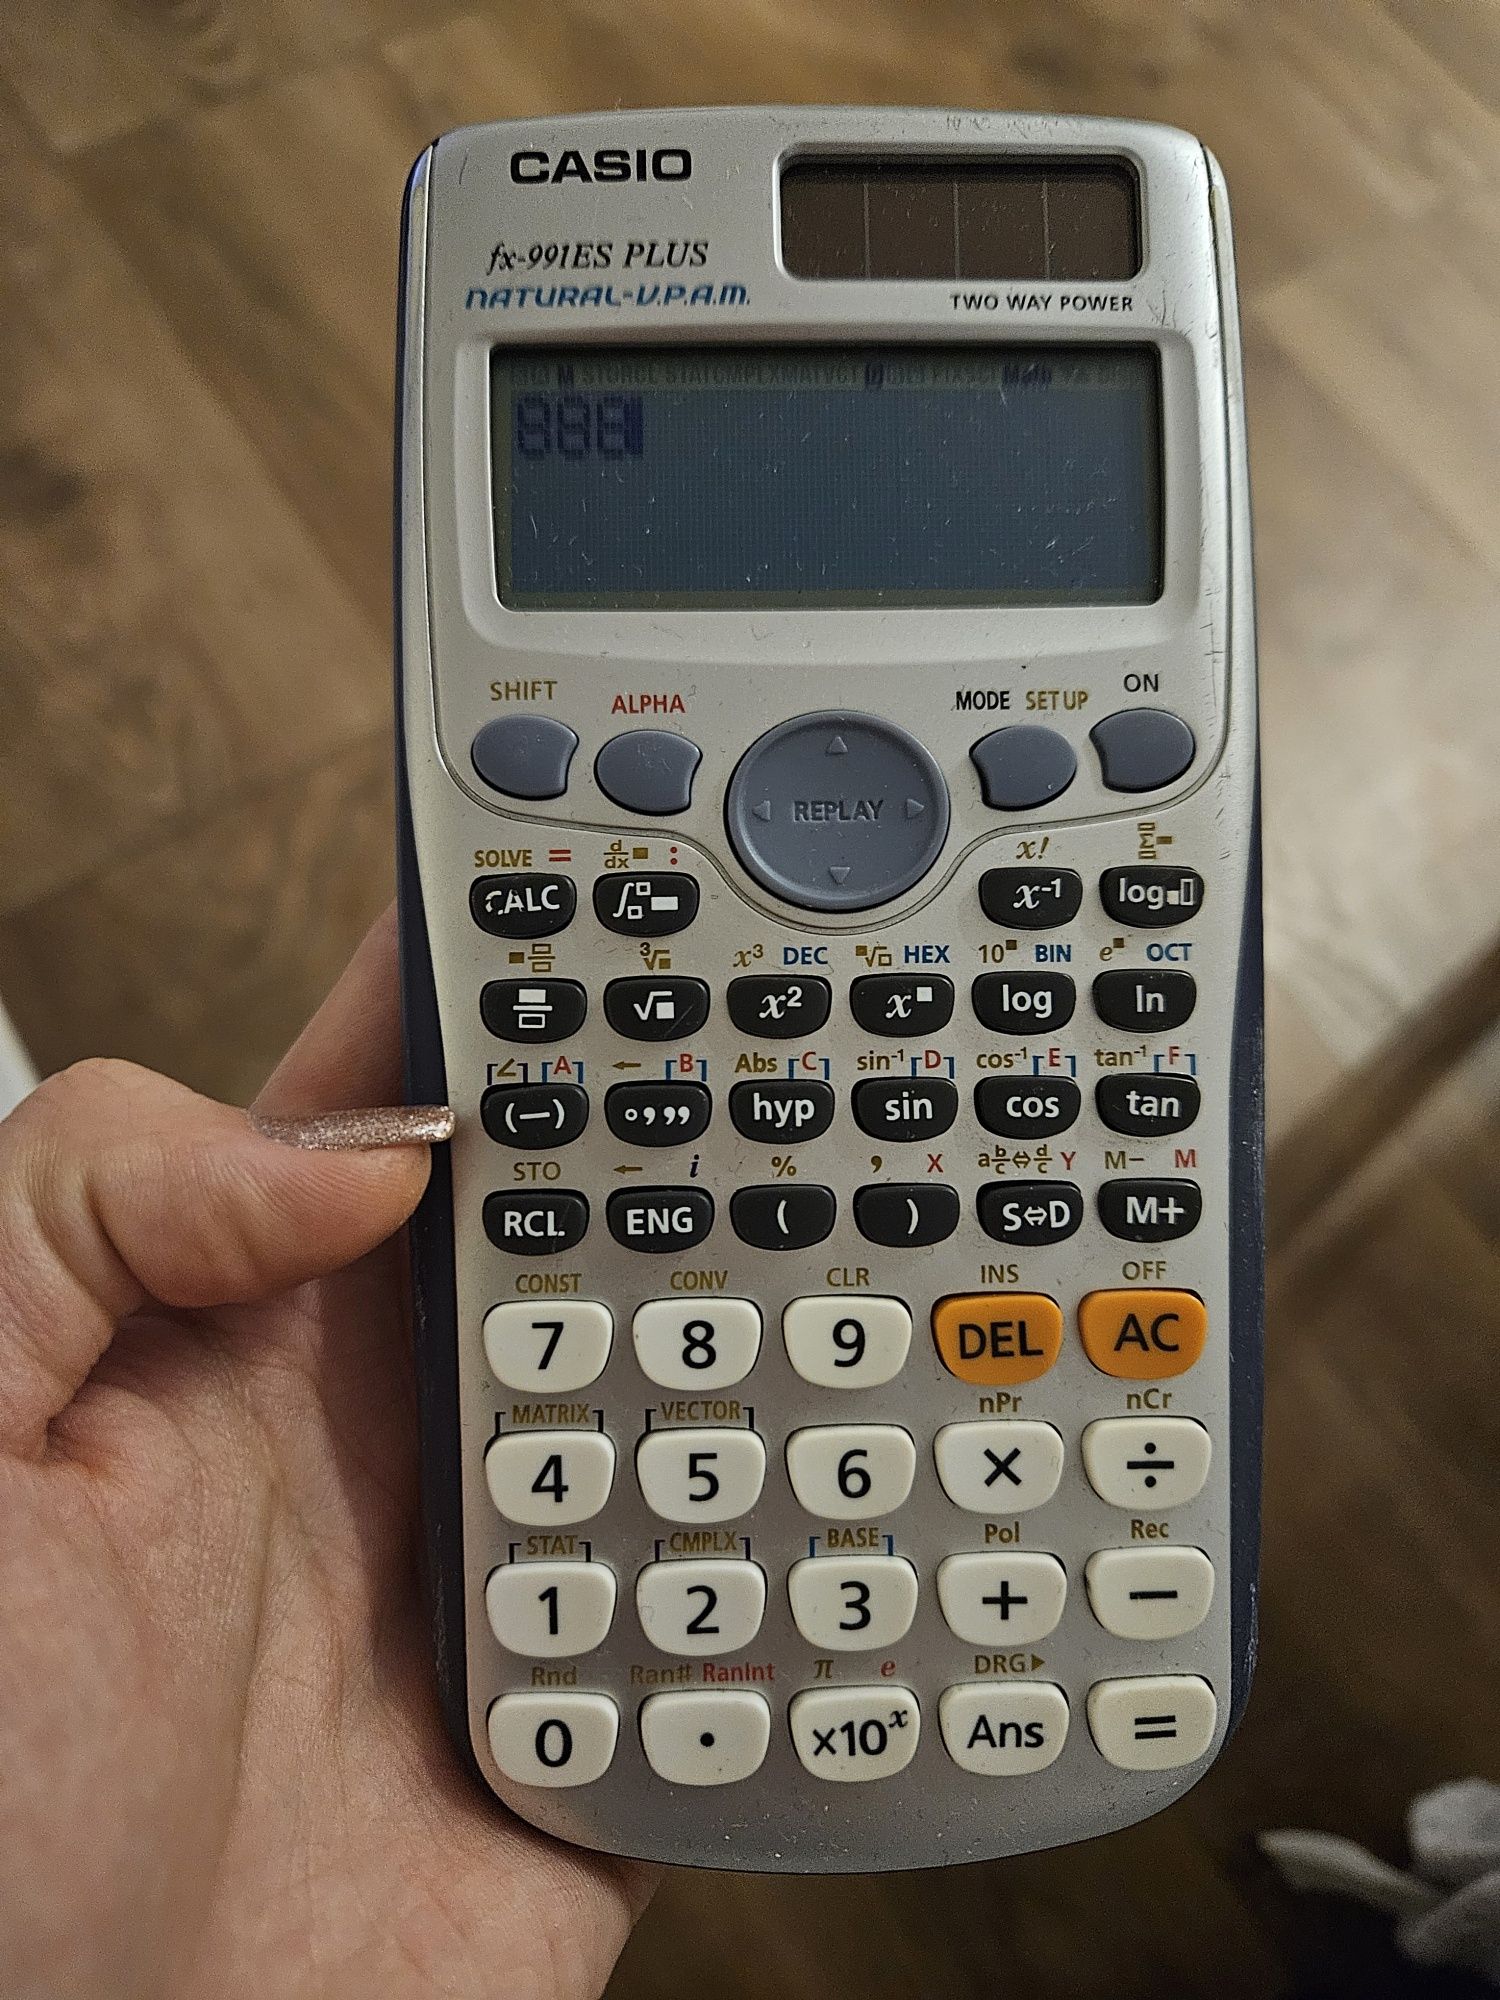 Kalkulator naukowy CASIO fx-991es plus